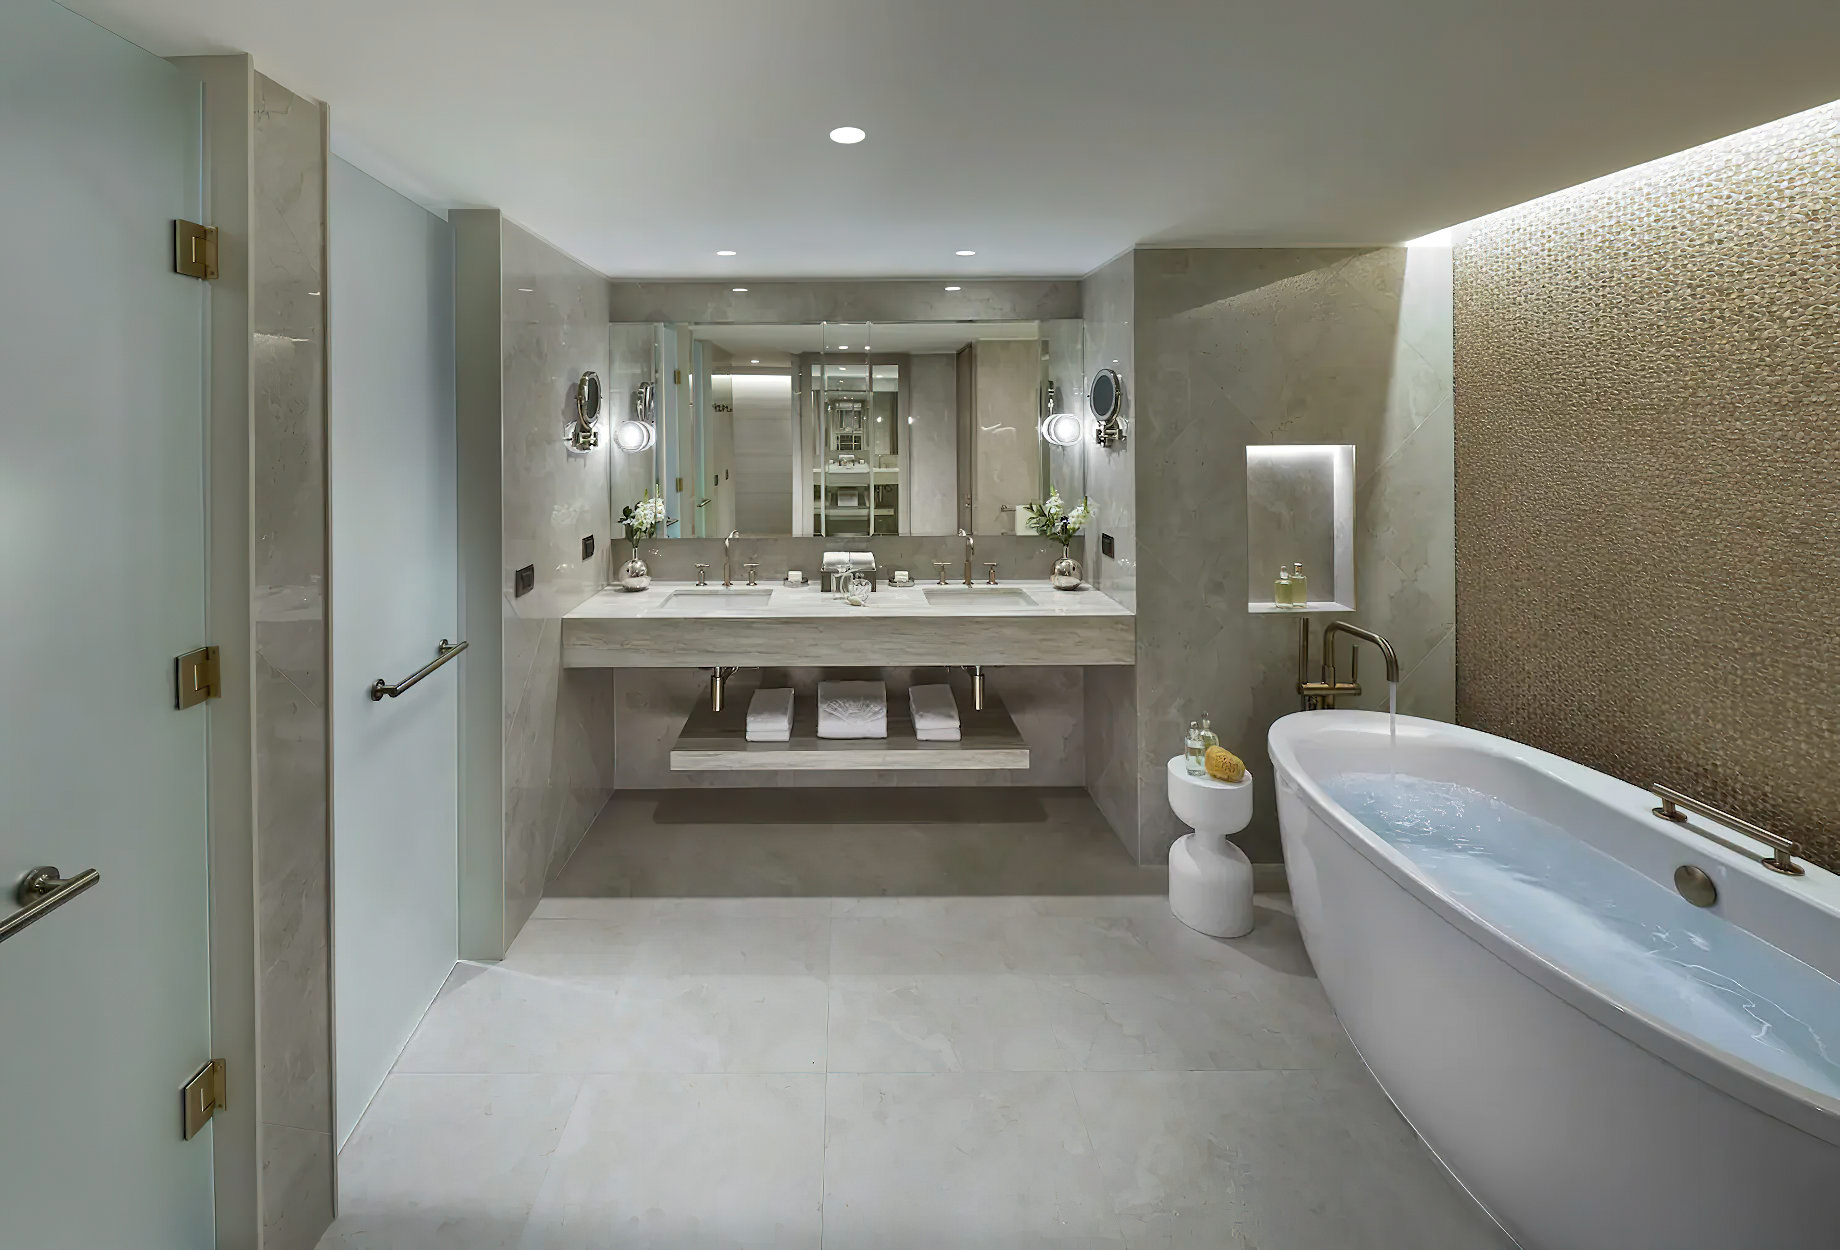 Mandarin Oriental, Santiago Hotel - Santiago, Chile - Guest Suite Bathroom